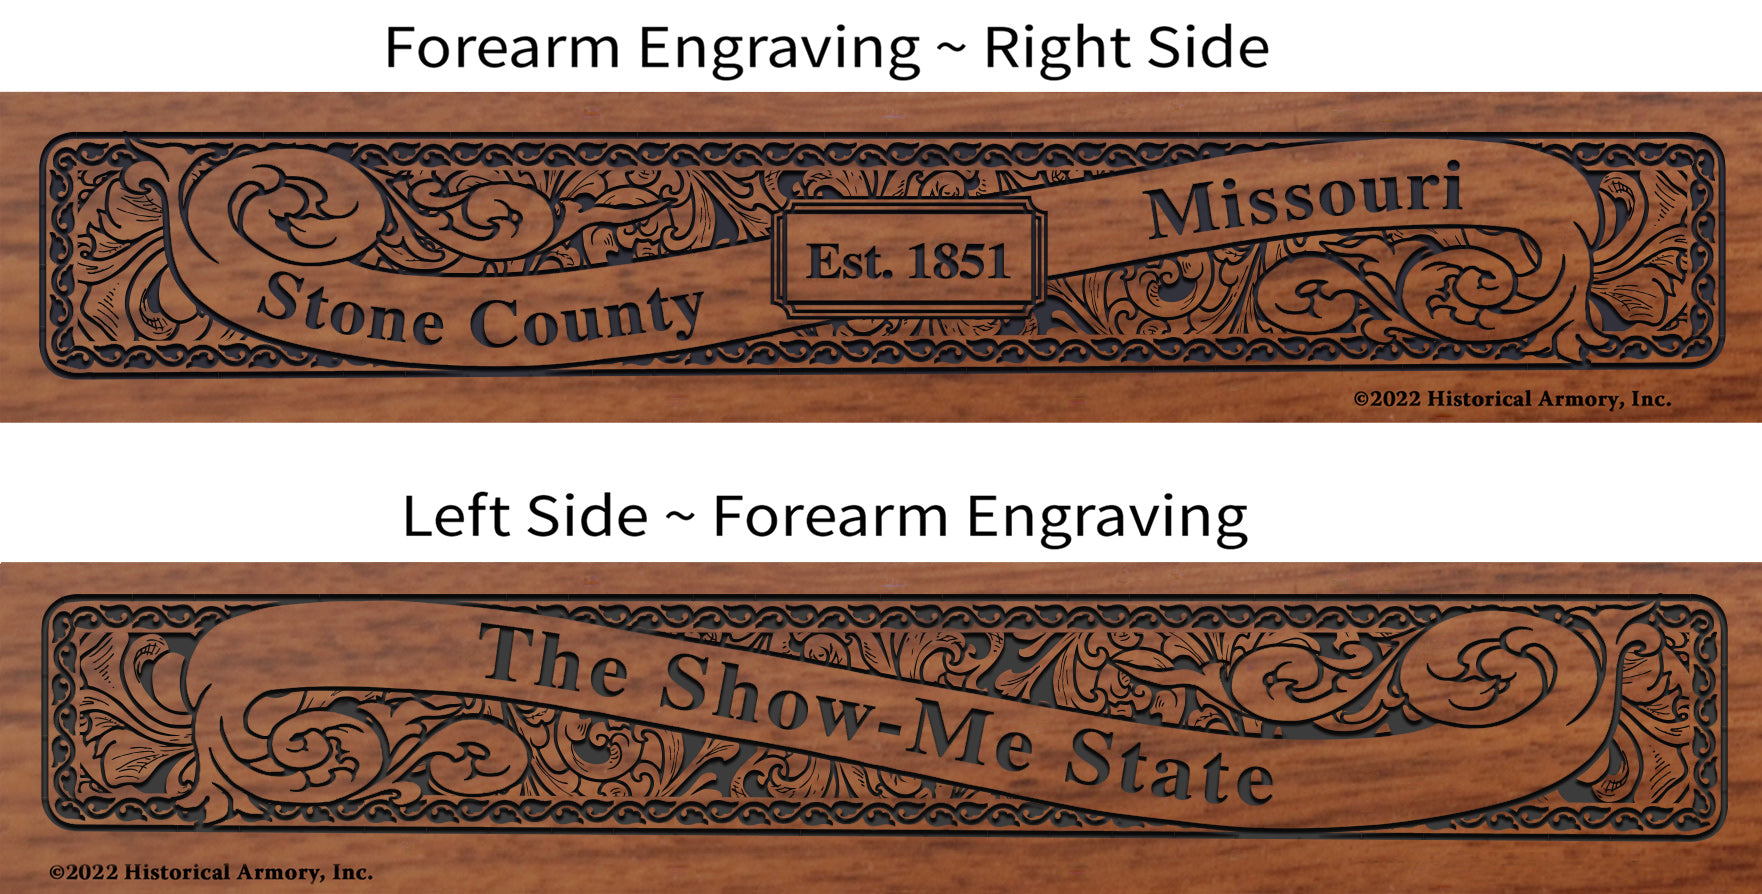 Stone County Missouri Engraved Rifle Forearm